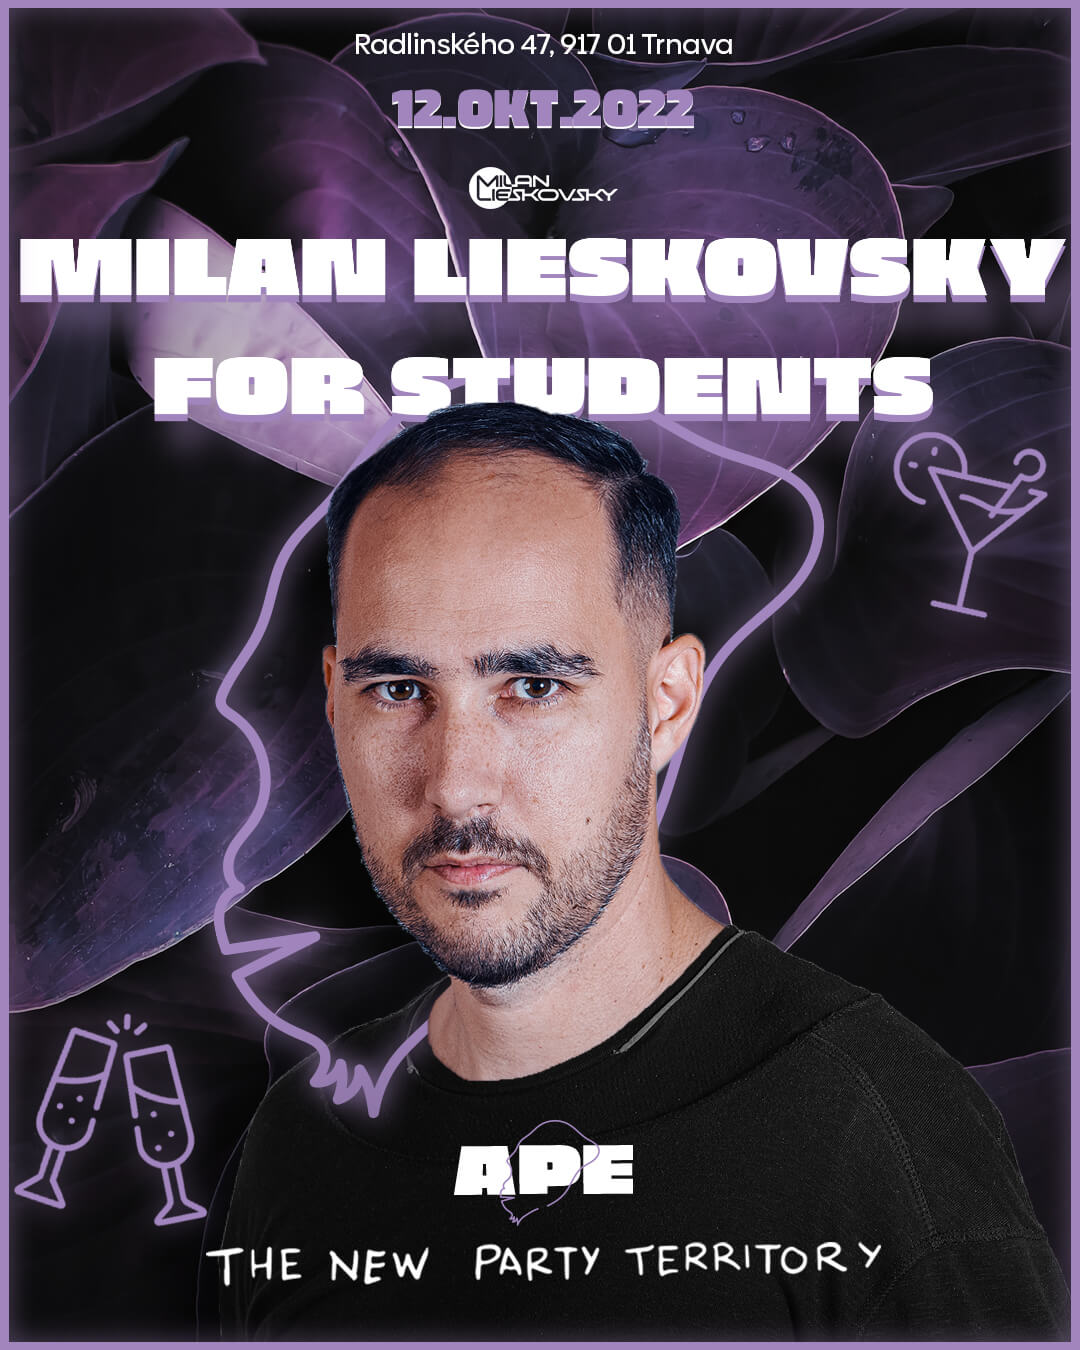 Lieskovsky for students